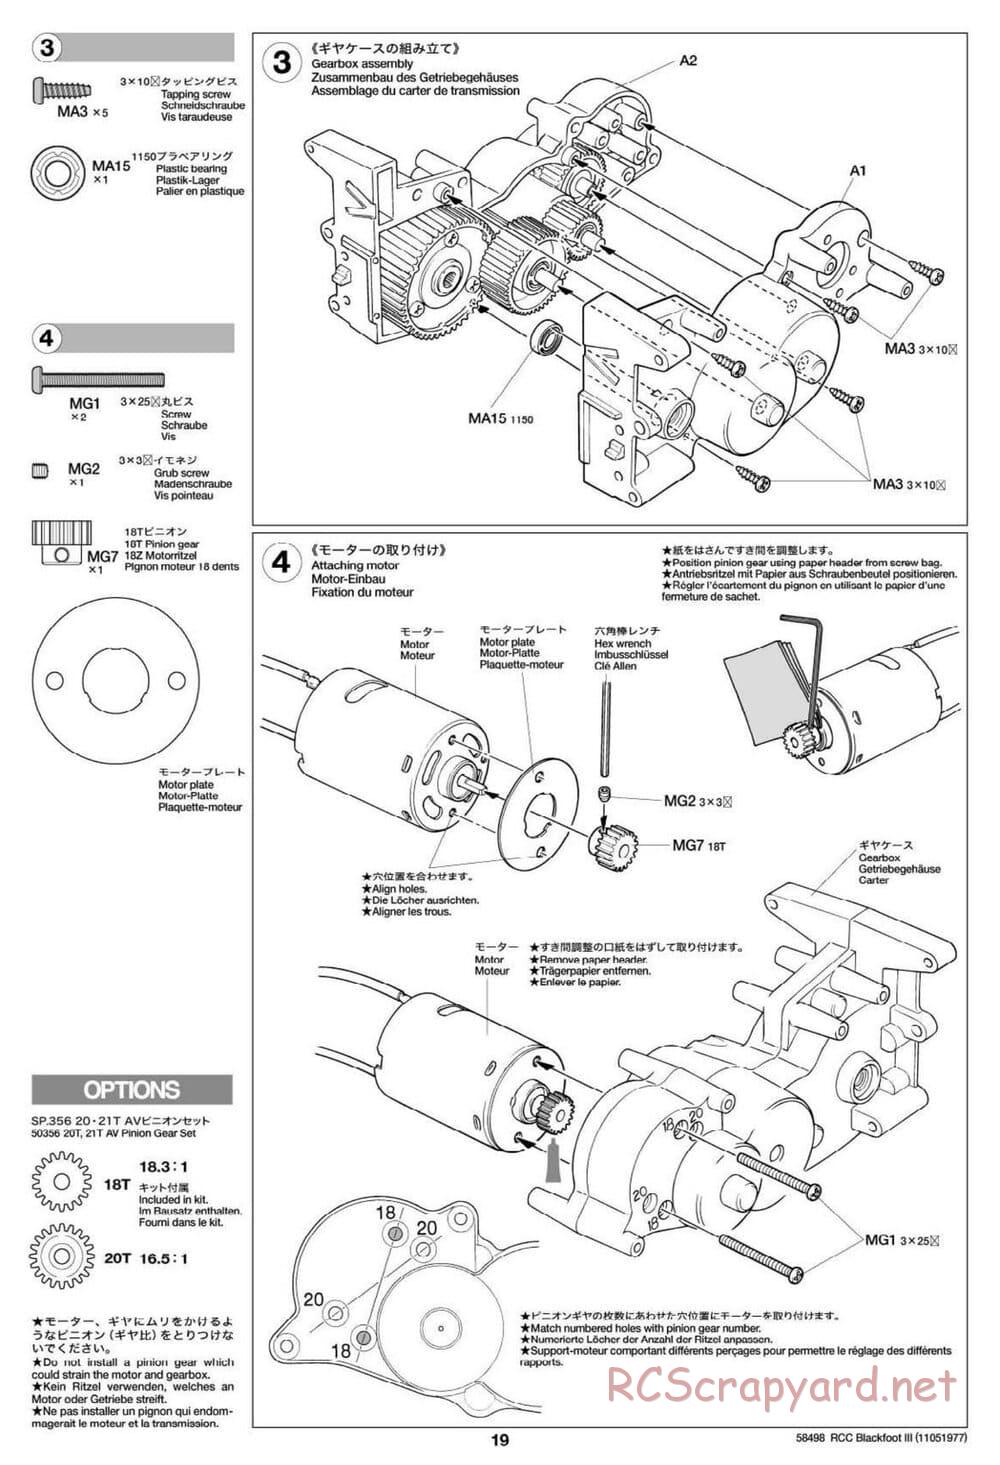 Tamiya - Blackfoot III - WT-01 Chassis - Manual - Page 19